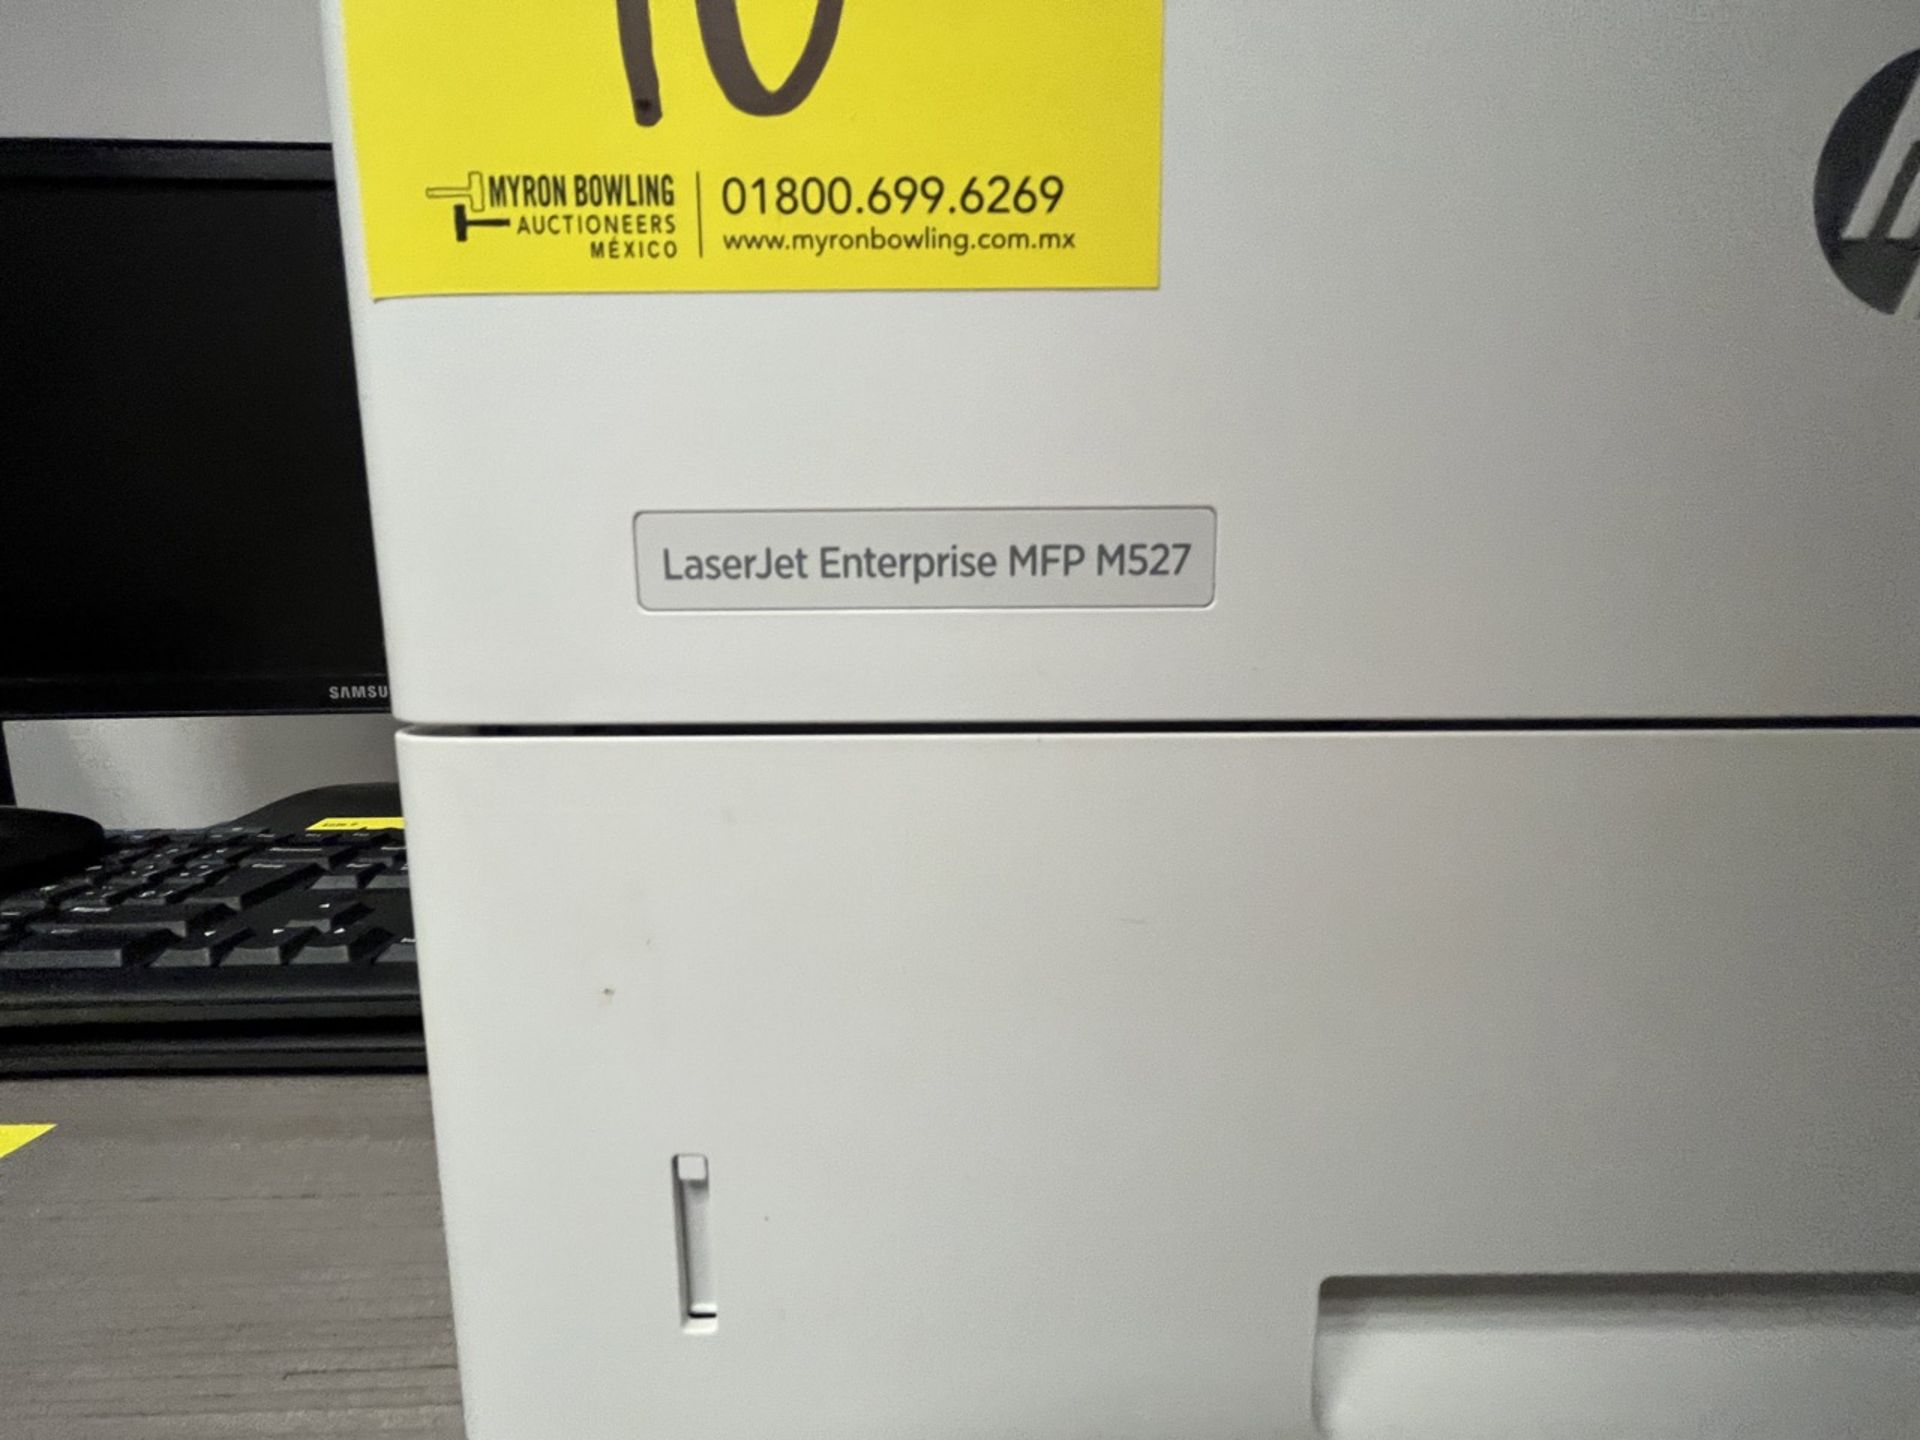 Multifunctional printer HP LaserJet Enterprise MFP M527, Model F2A76A, MXBCK1H0ZV Series; Samsumg M - Image 7 of 13